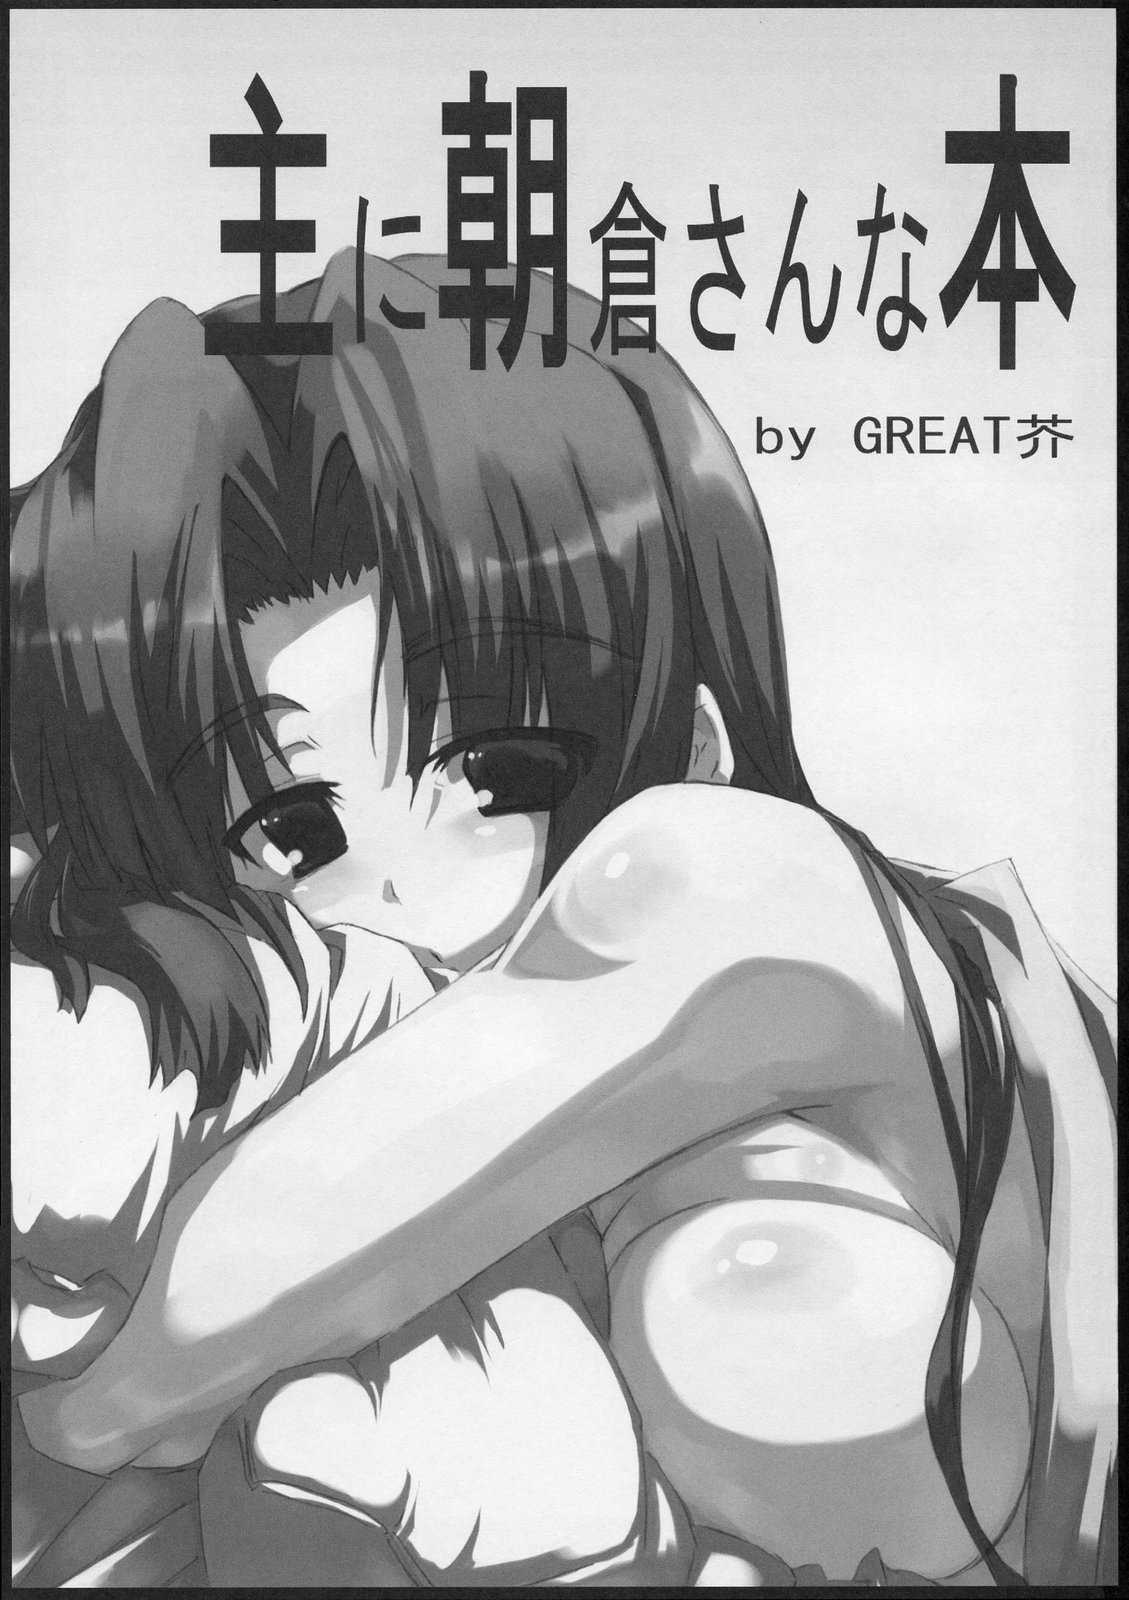 Great Akuta - Mainly Asakura Book 